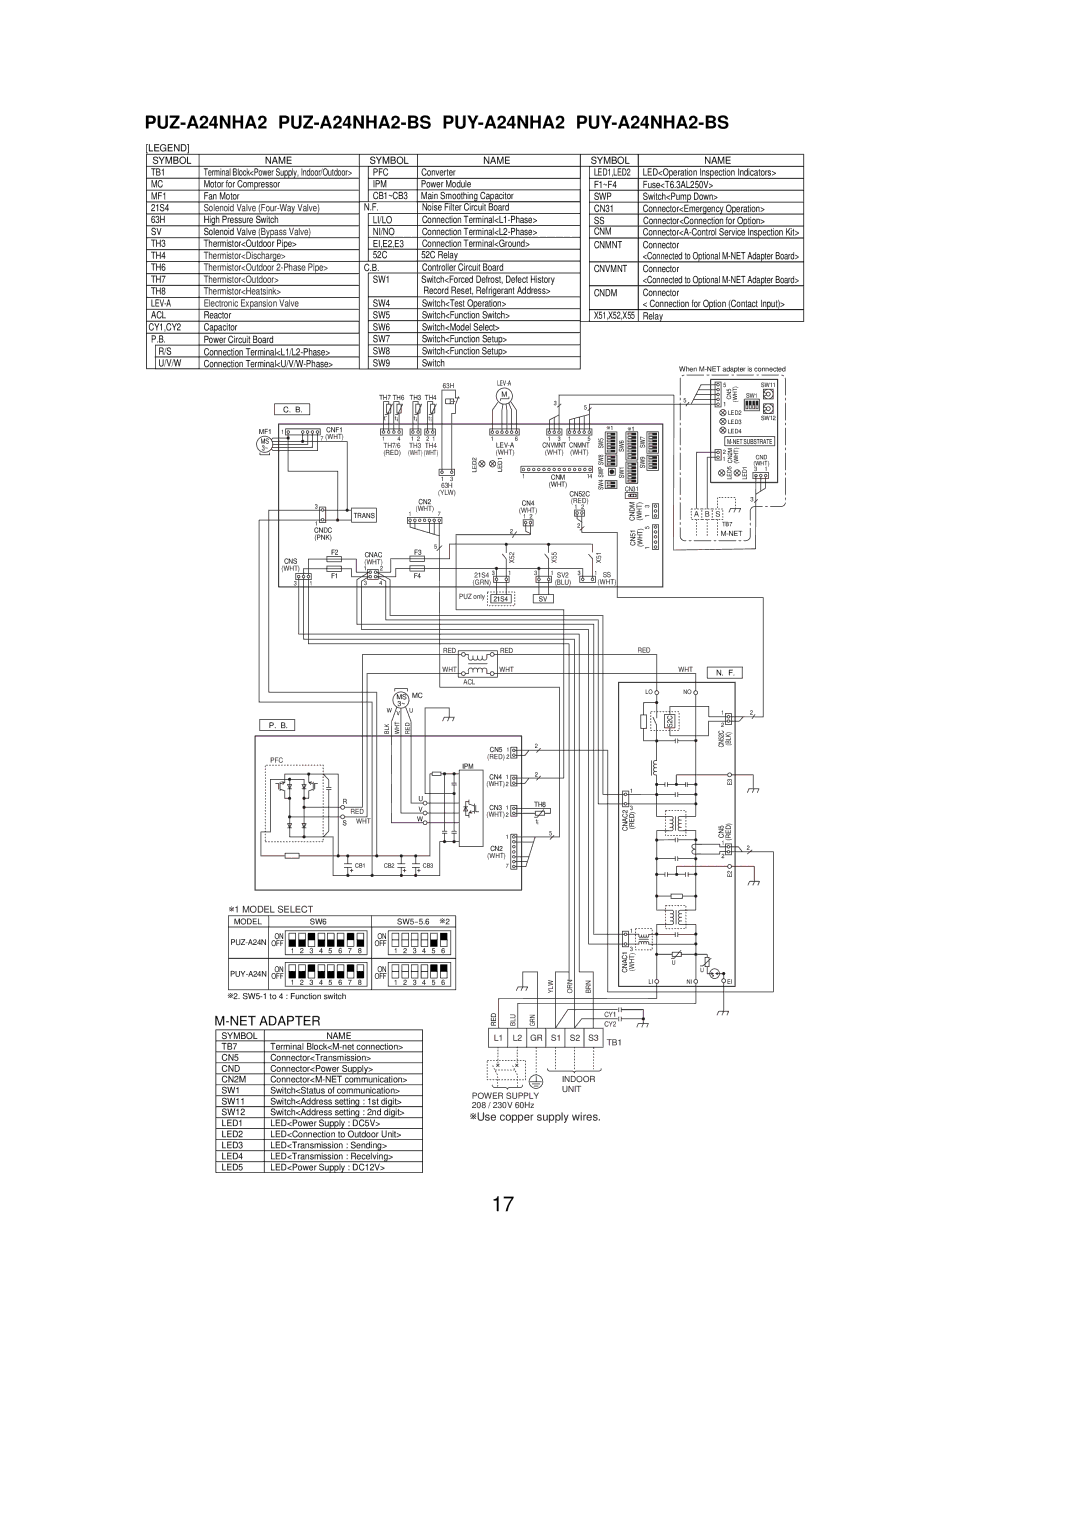 Mitsubishi Electronics PUZ-A42NHA2-BS, PUZ-A30NHA2 PUZ-A24NHA2 PUZ-A24NHA2-BS PUY-A24NHA2 PUY-A24NHA2-BS, NET Adapter 